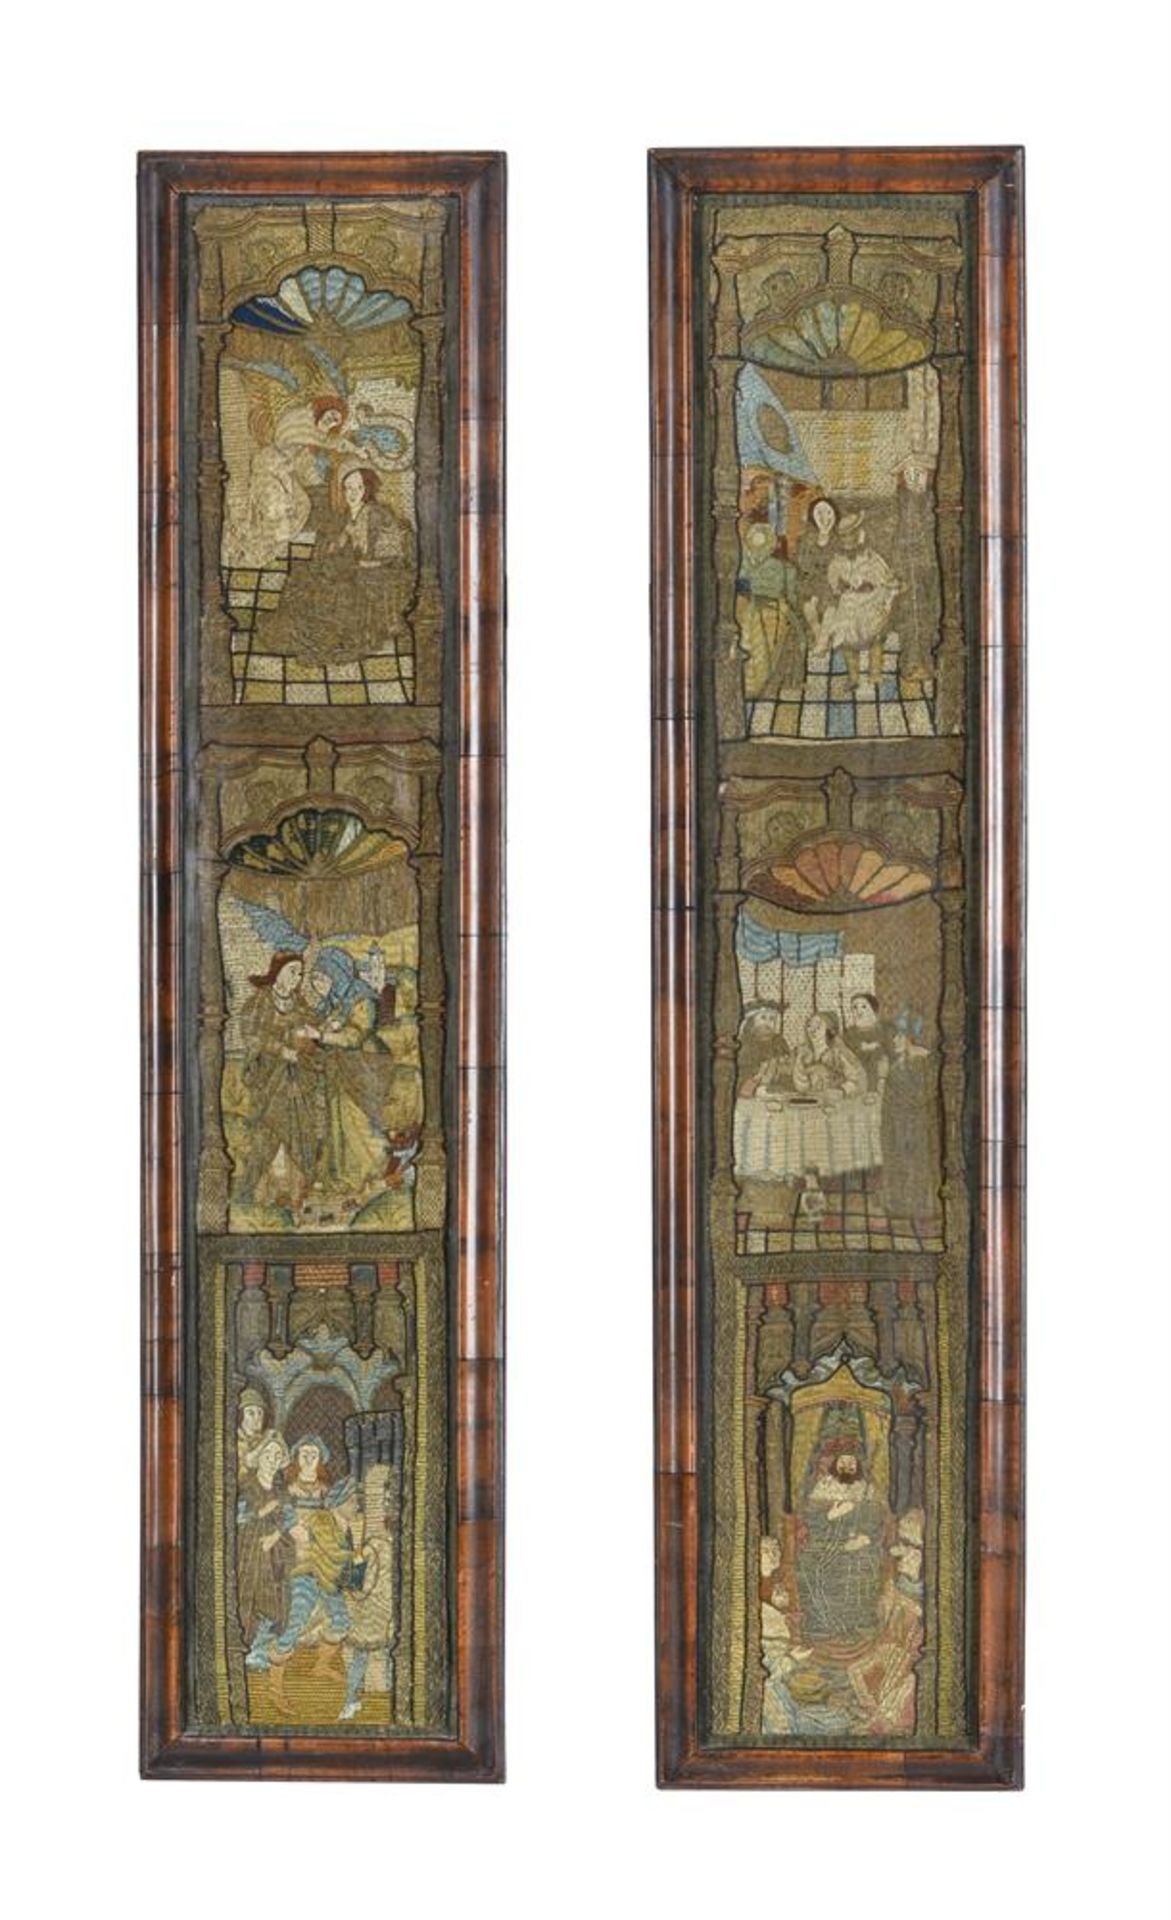 A SET OF THREE FRAMED OPUS ANGLICANUM VESTMENT NEEDLEWORK PANELS, 16TH CENTURY - Image 2 of 6